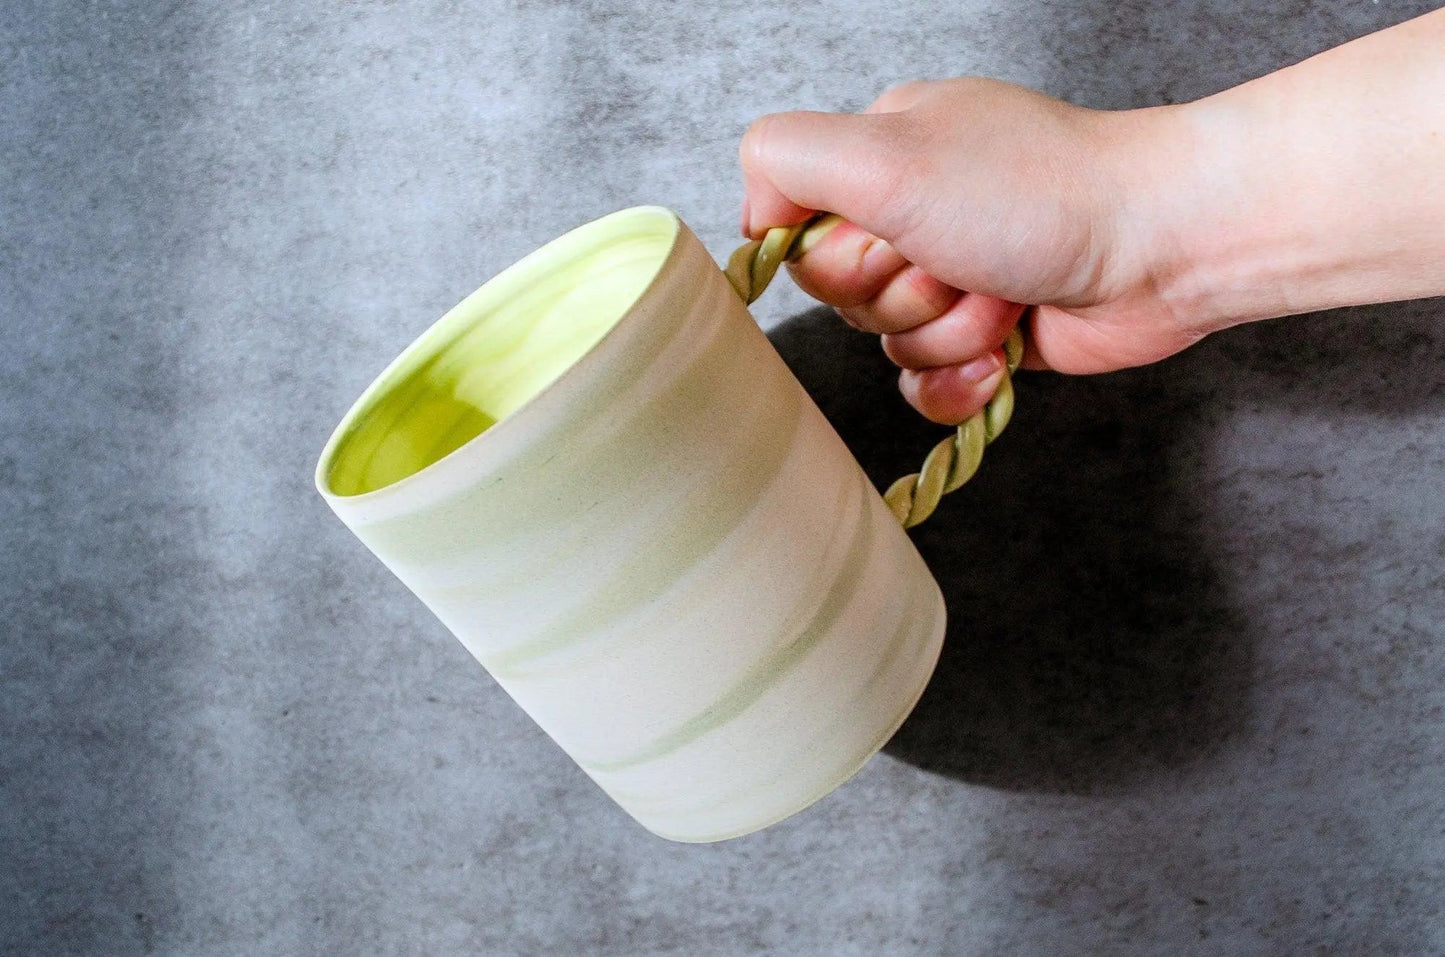 Twisted Handle Mug - Saori M Stoneware